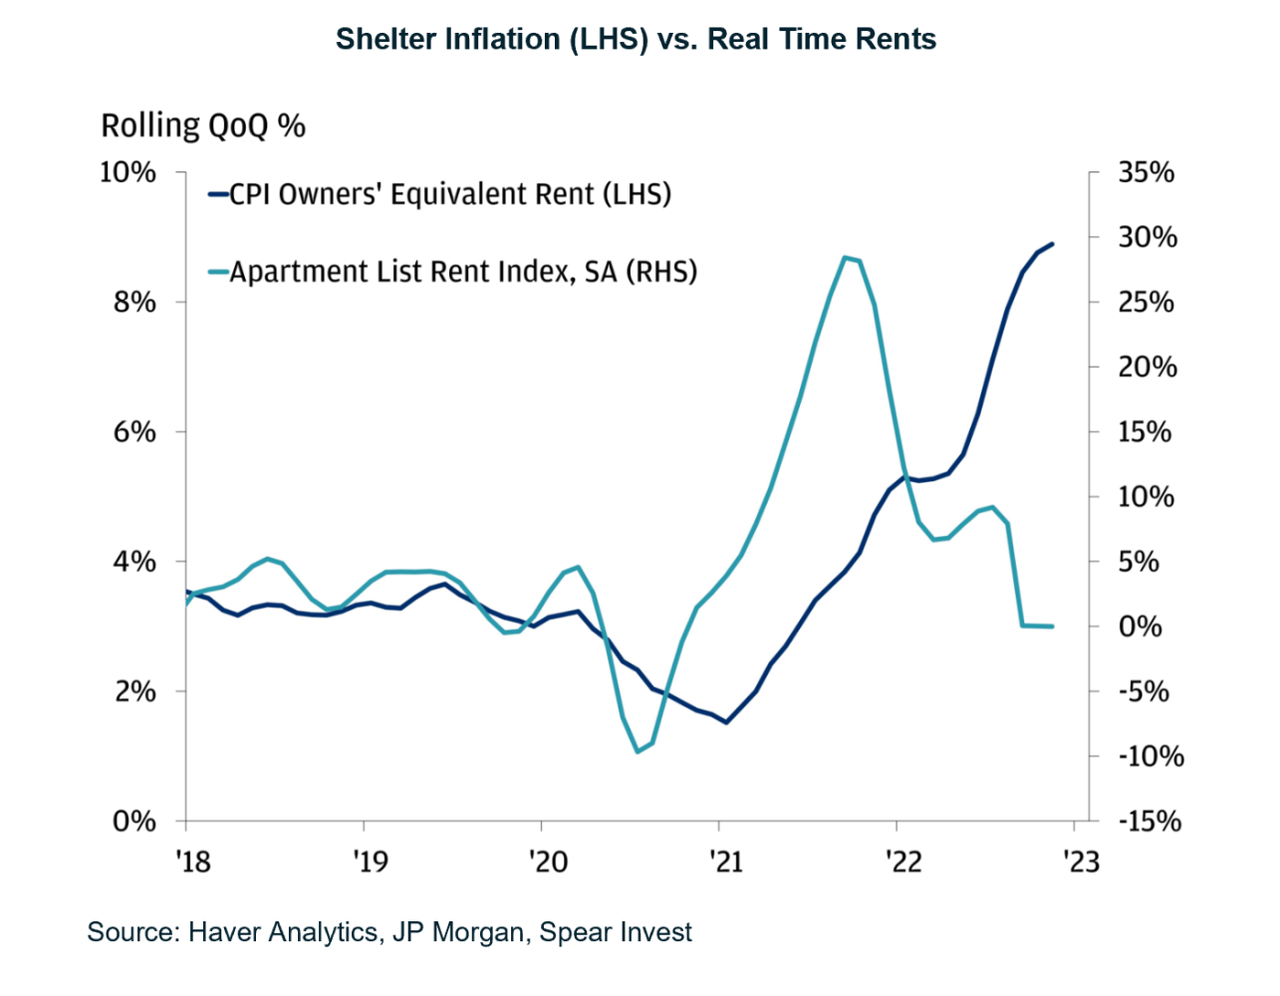 Shelter inflation versus real-time rents